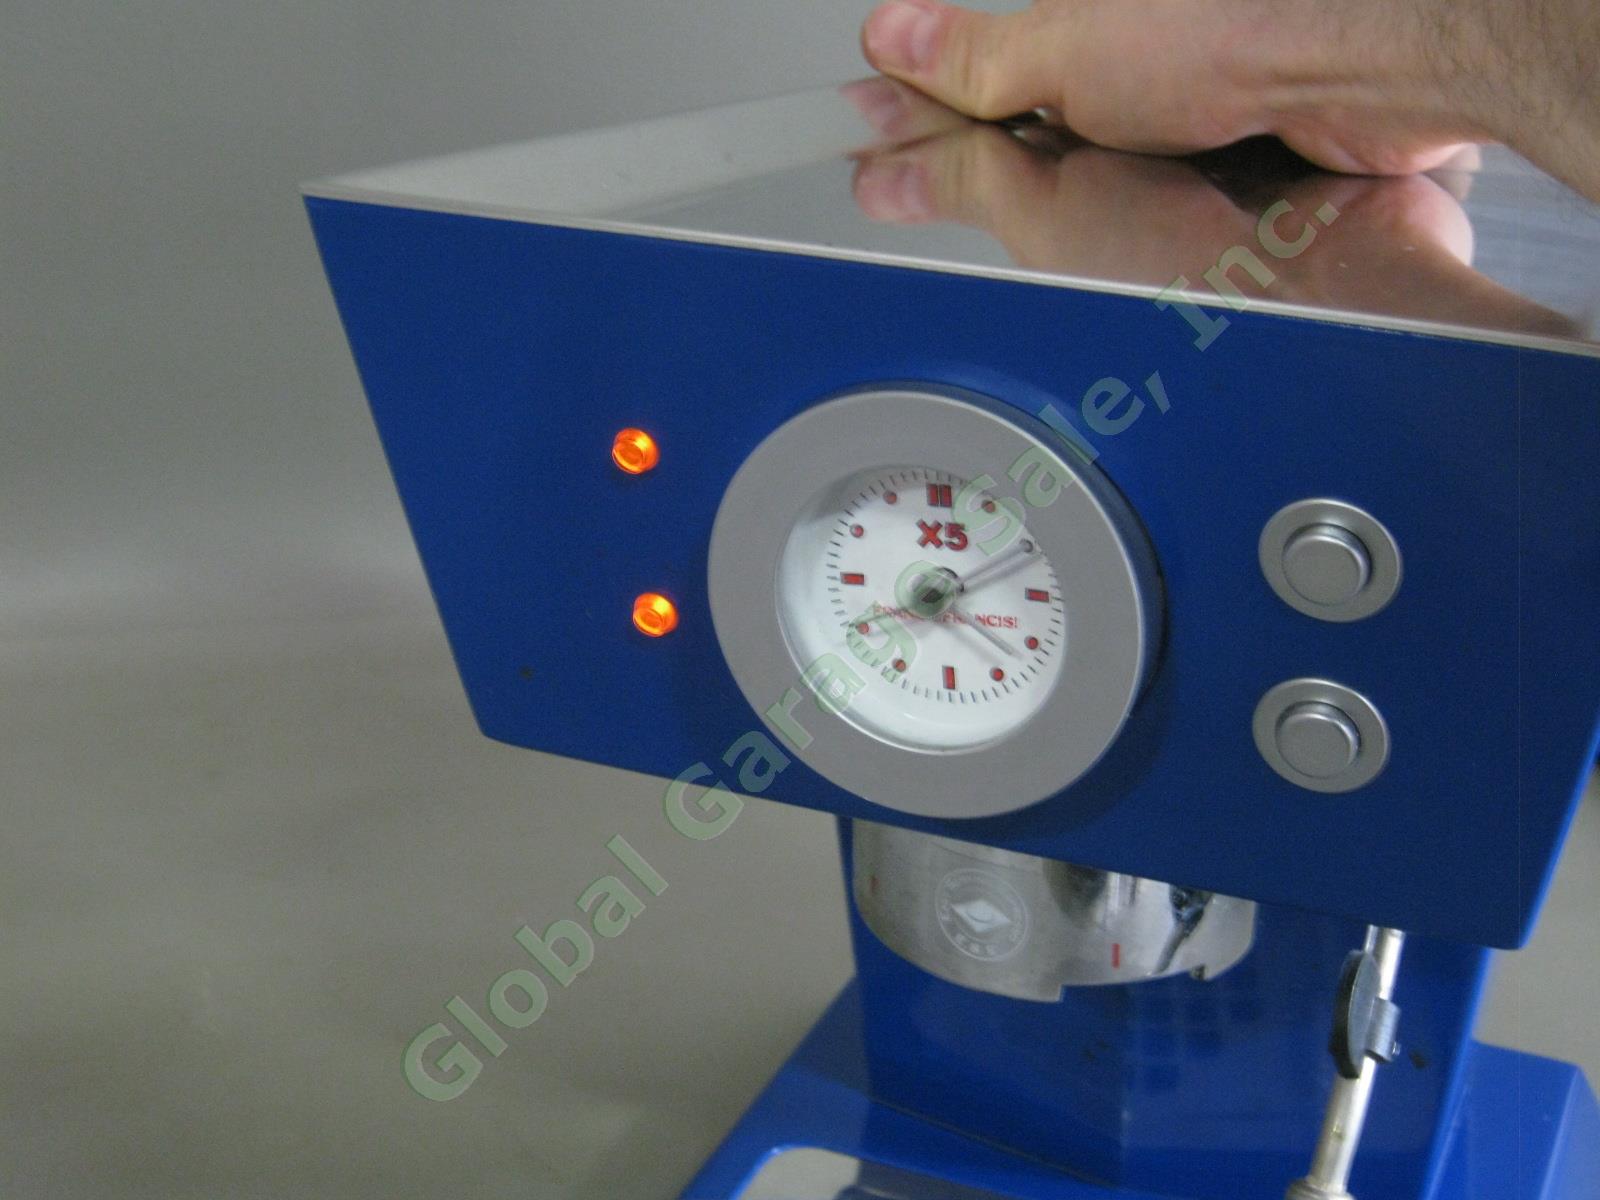 Royal Blue Francis X5 Espresso Maker Machine Tested Works Luca Trazzi Design NR! 2